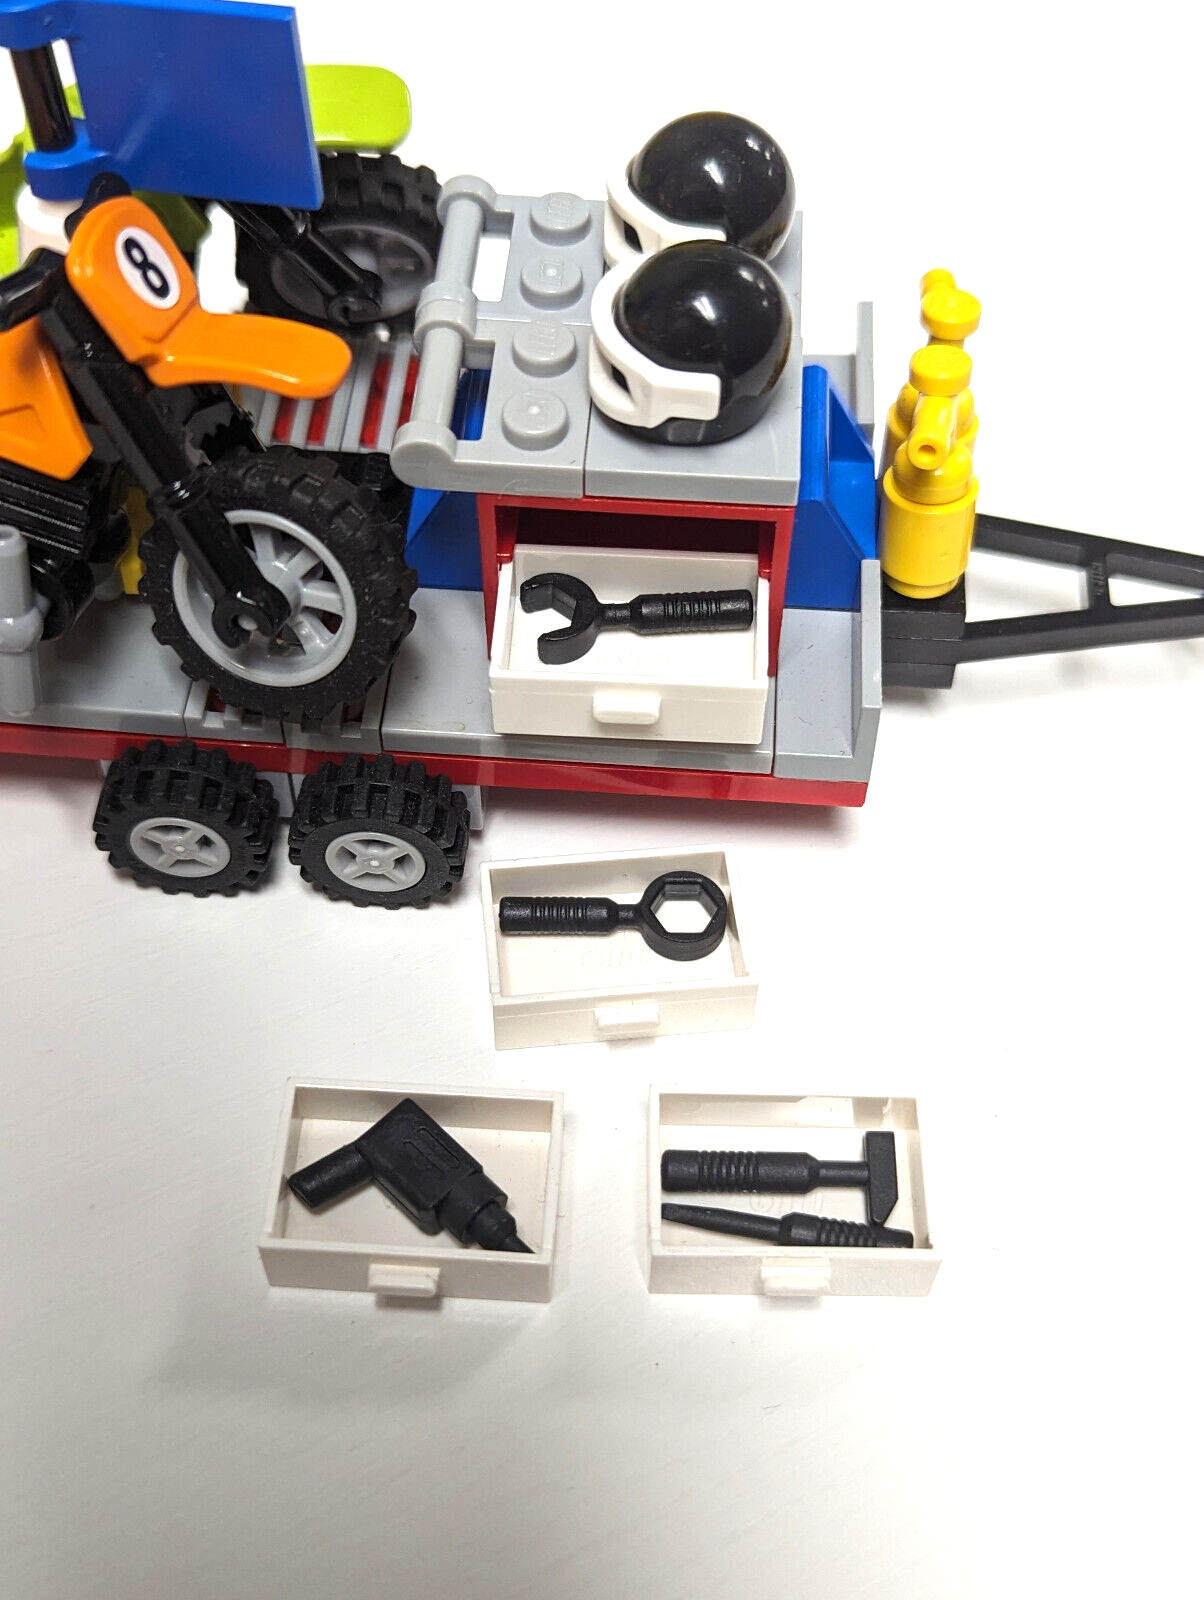 Lego City Lot: 4433 Dirt Bike Transporter & 7890 Ambulance - Complete w/ Manuals